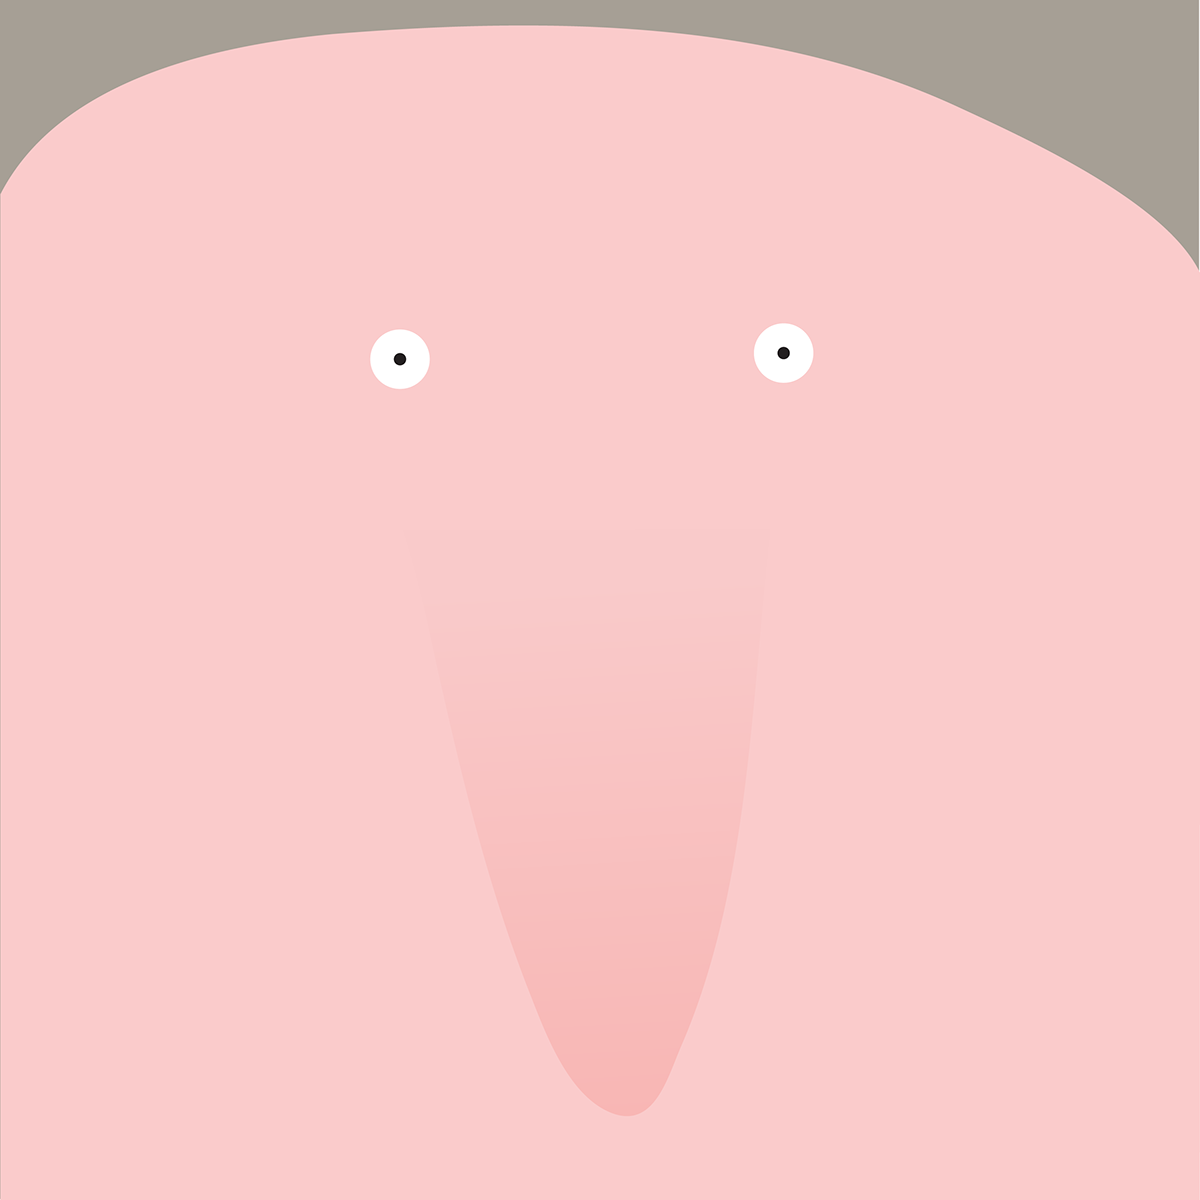 thumb pink man face smile frown screenprint Serigraphy